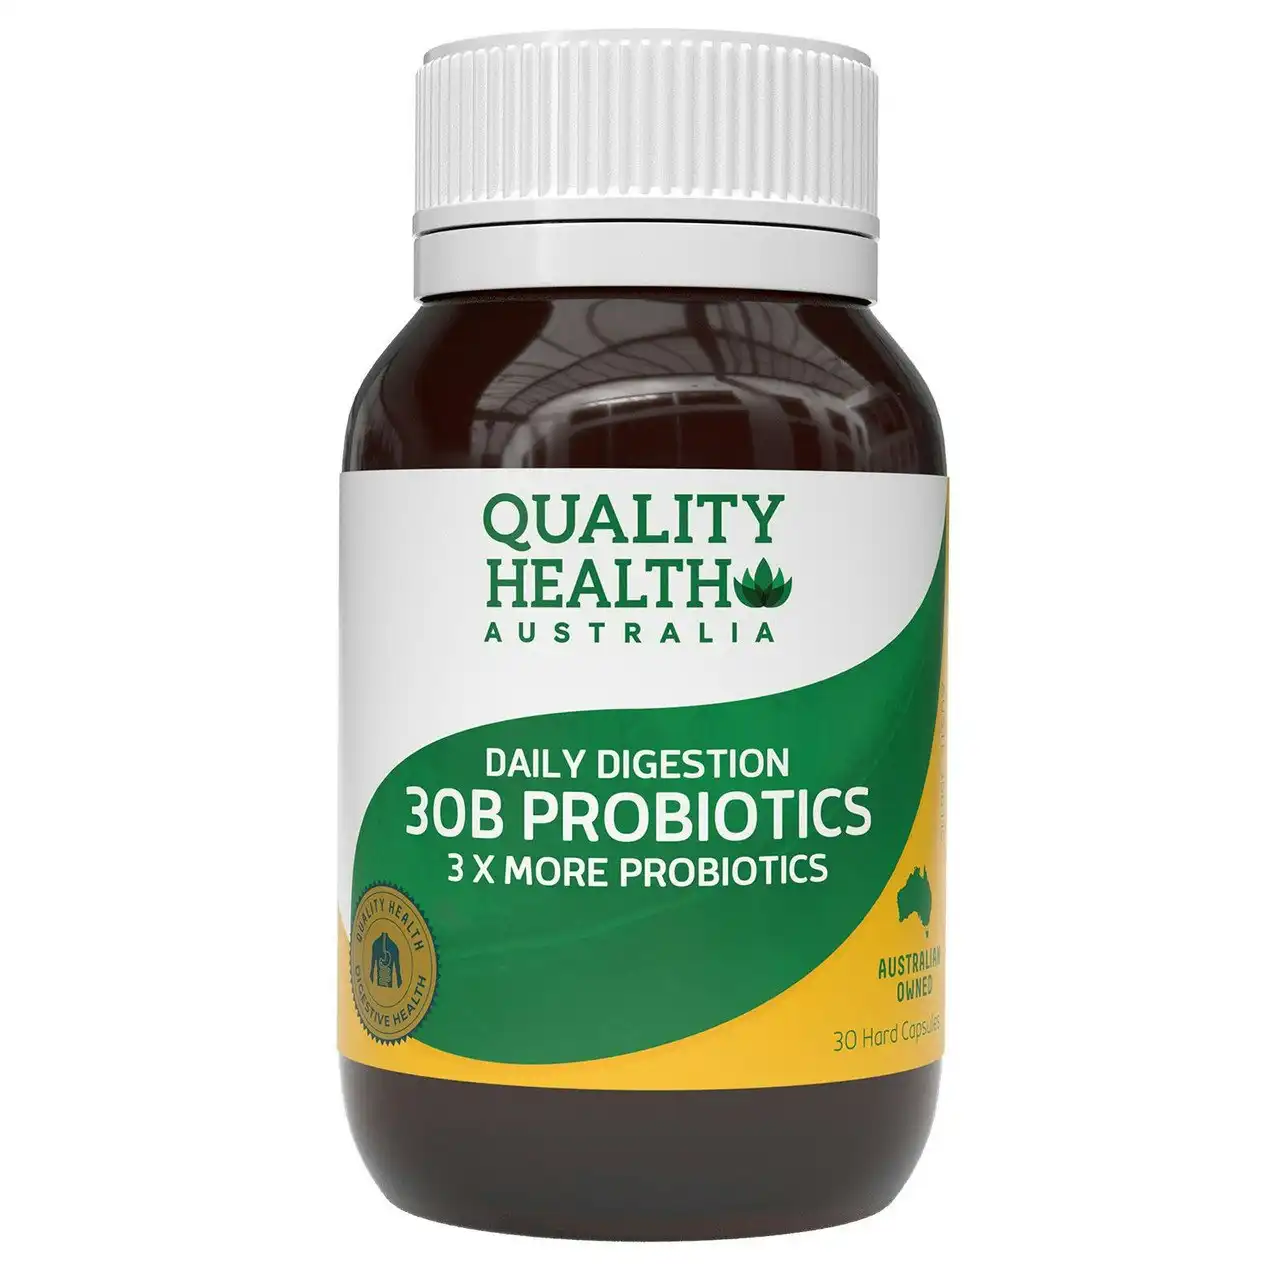 Quality Health Australia Daily Digestion 30B Probiotics 3 X More Probiotics 30s